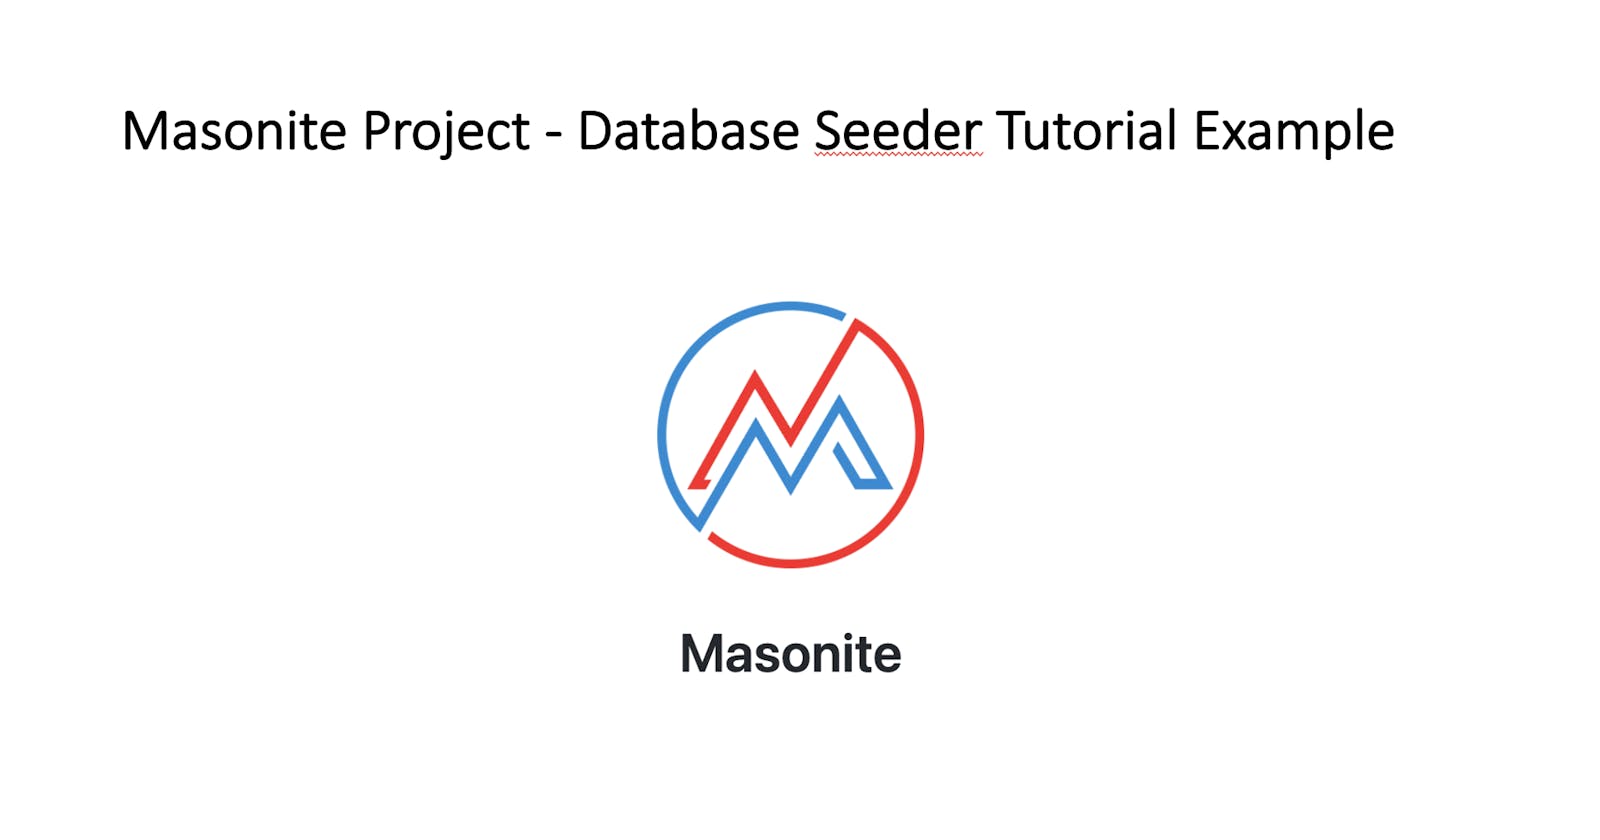 Masonite Project - Database Seeder Tutorial Example